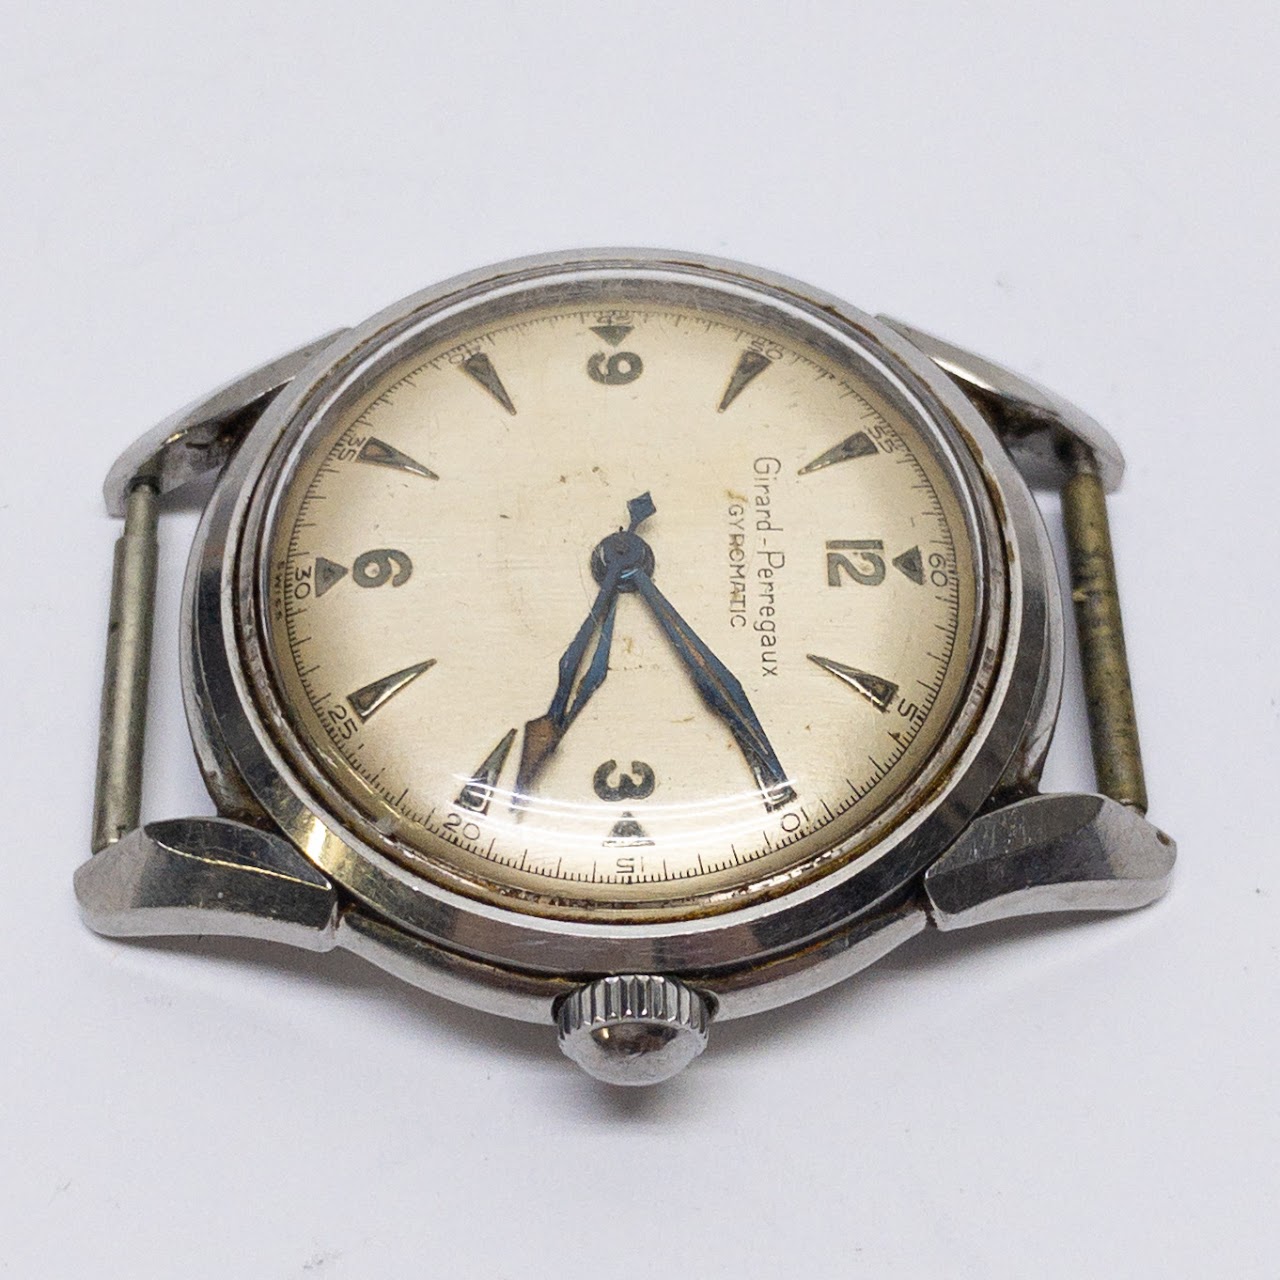 Girard Perregaux Vintage Automatic Wristwatch